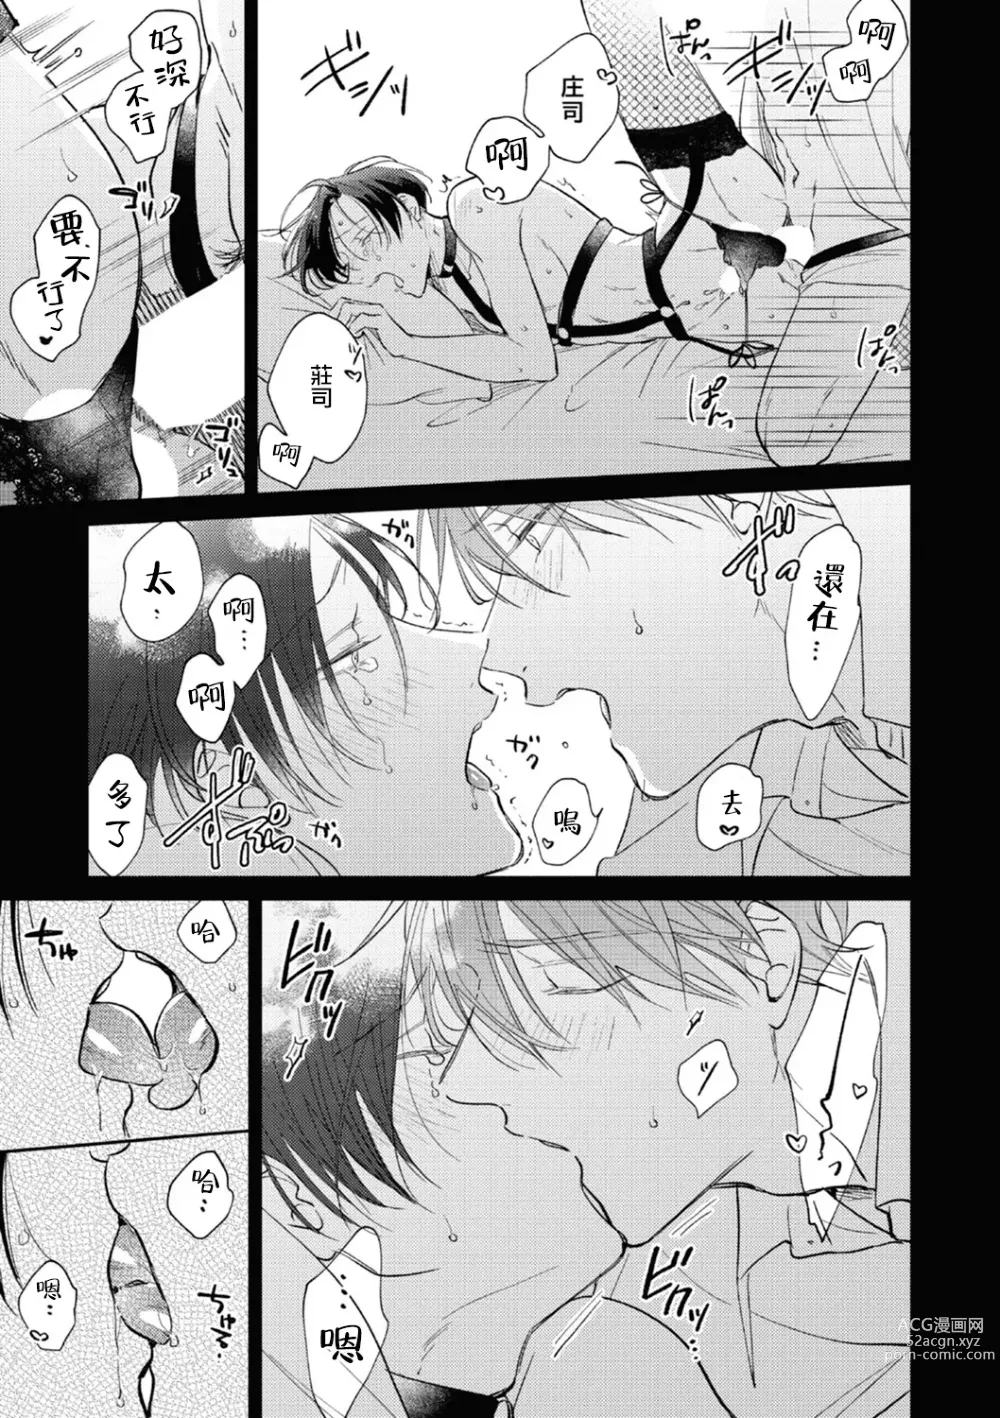 Page 240 of manga 魔鬼上司·狱寺先生想暴露 Ch. 7-12+加笔+13